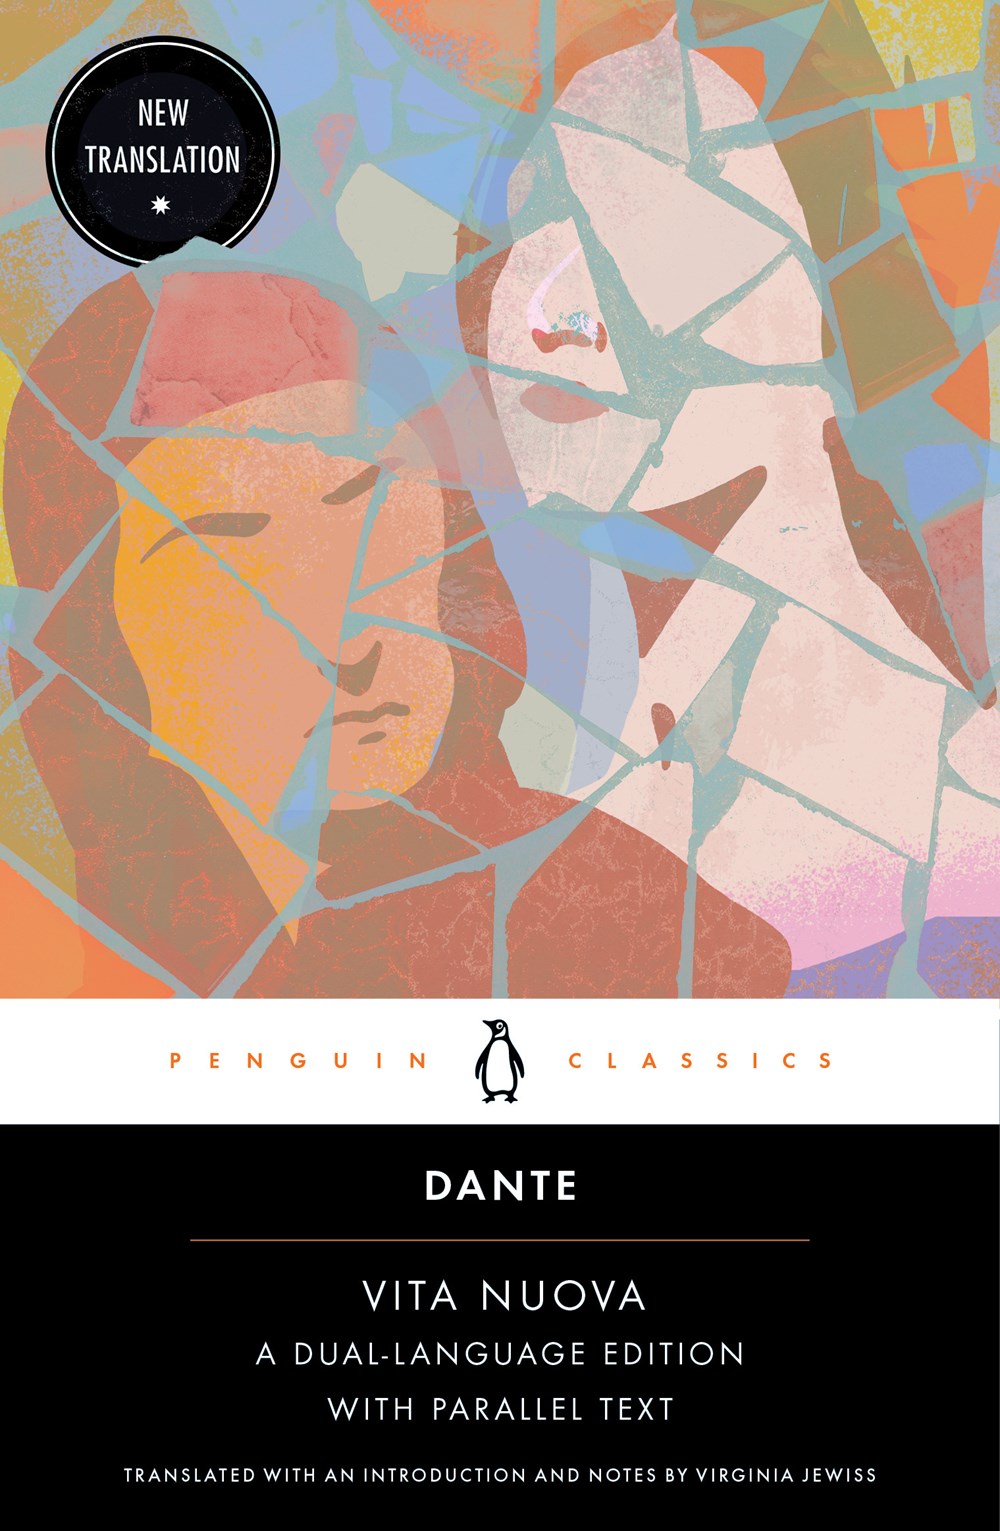 Dante's La Vita Nuova: A Dual-Language Edition with Parallel Text